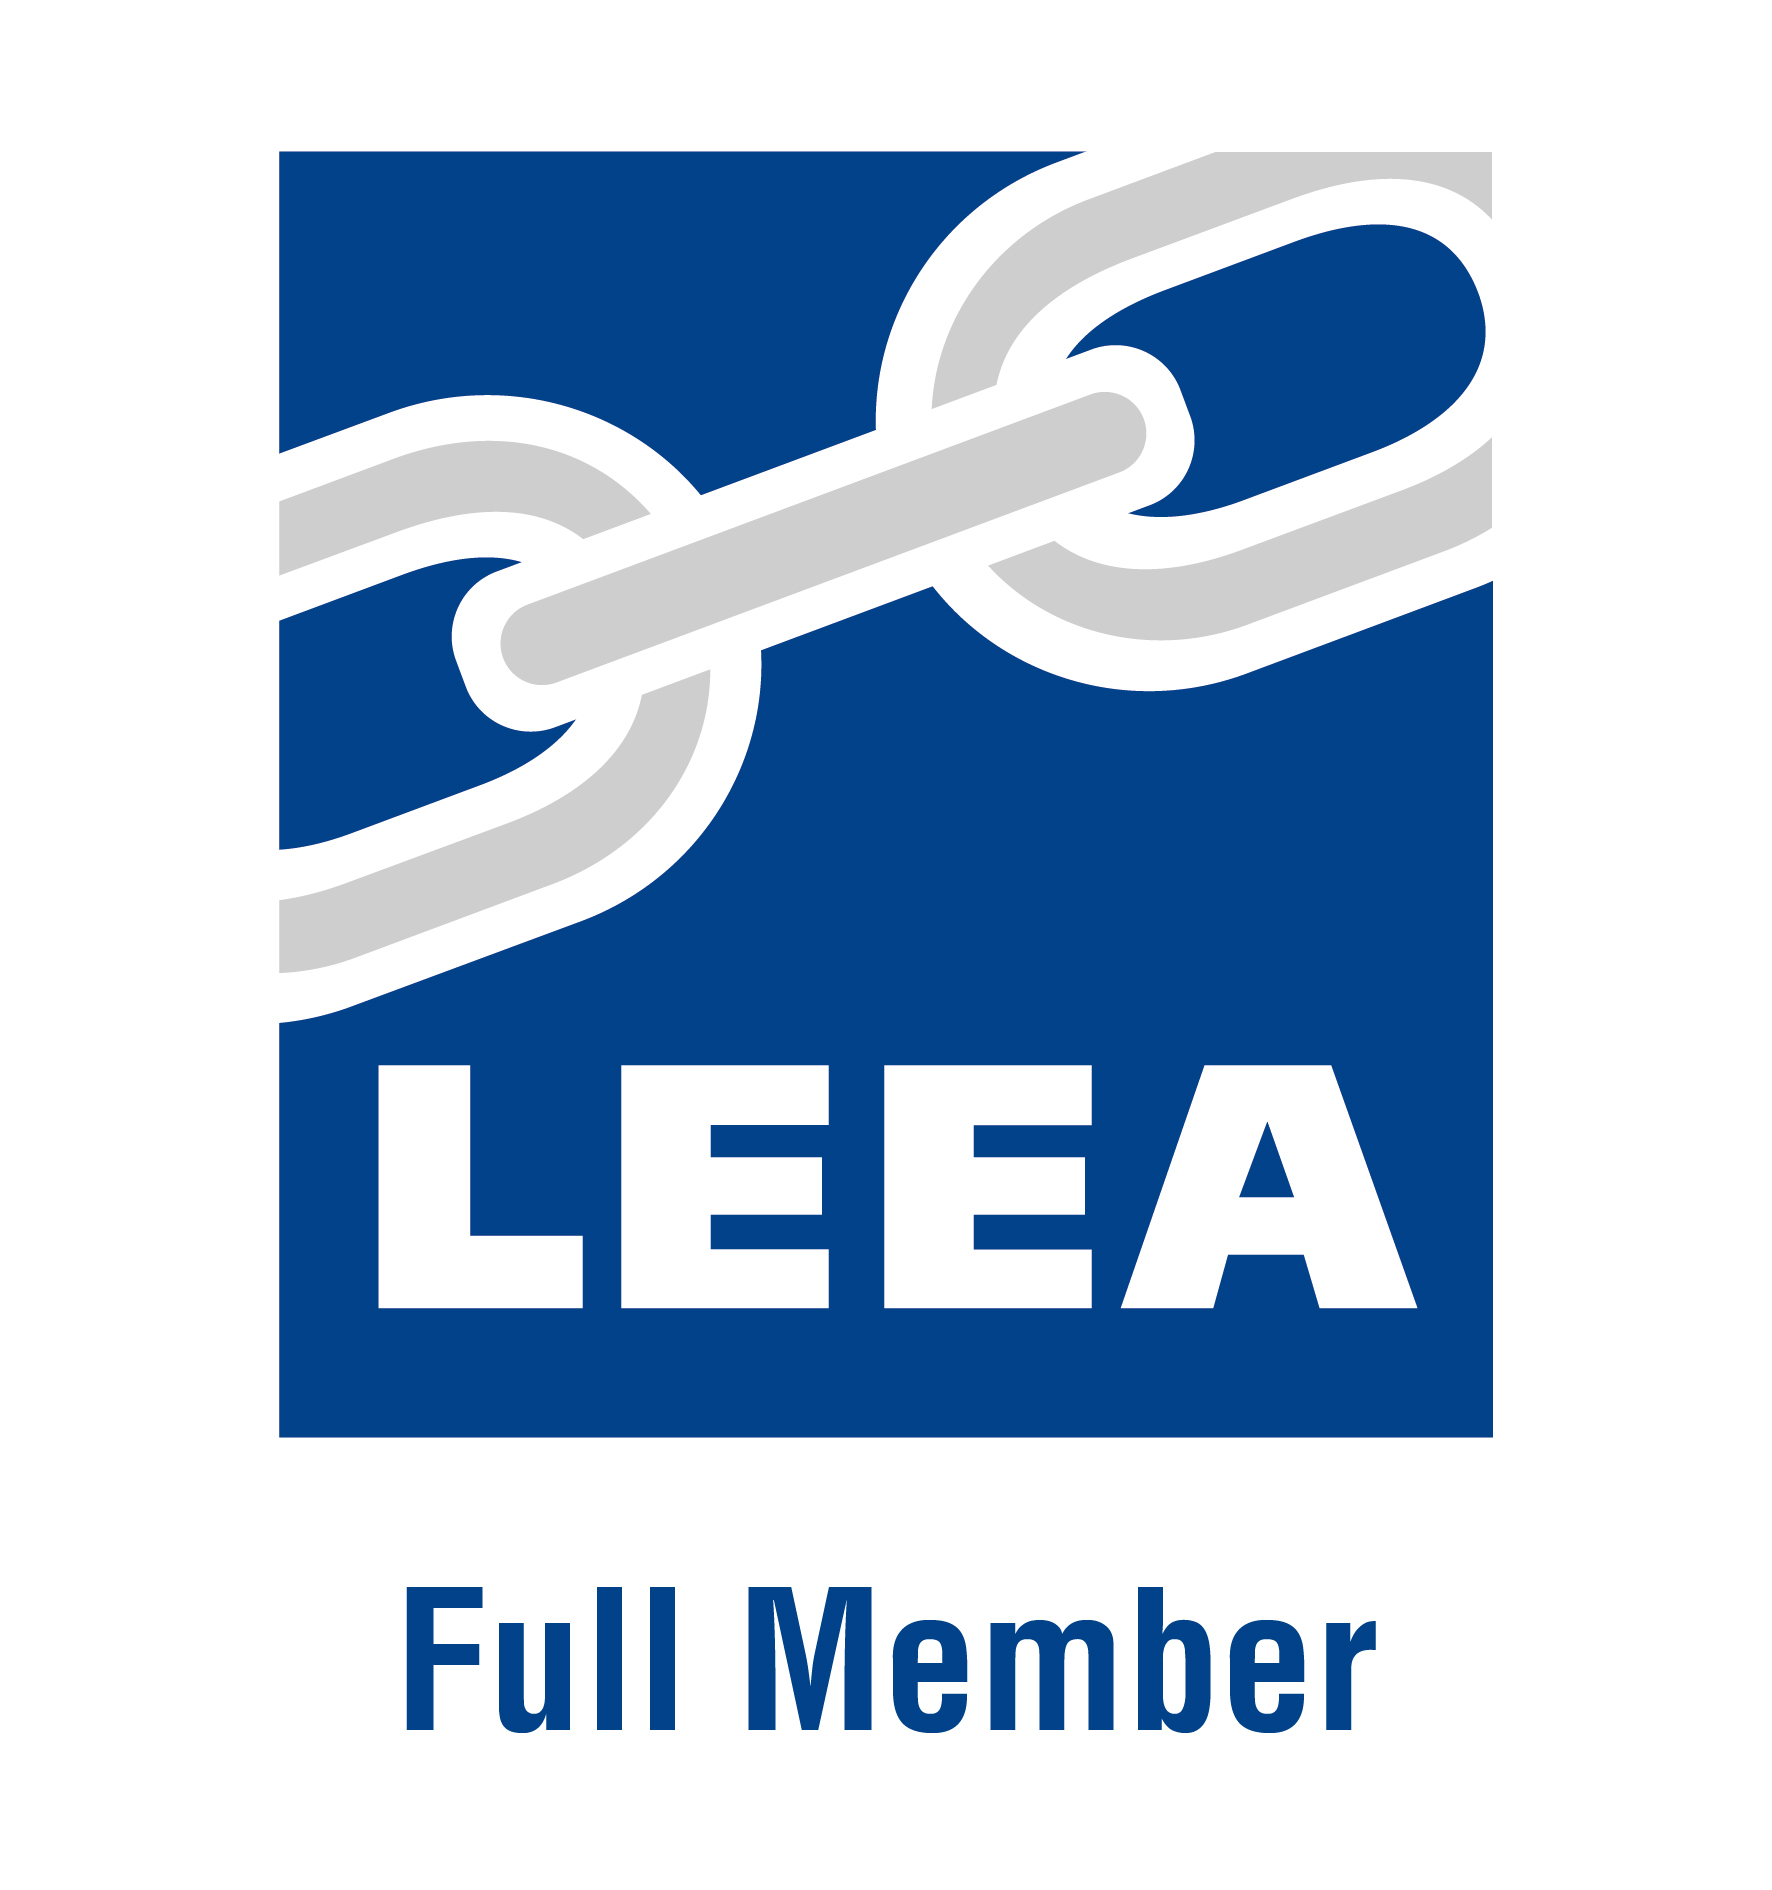 LEEA Logo photo - 1